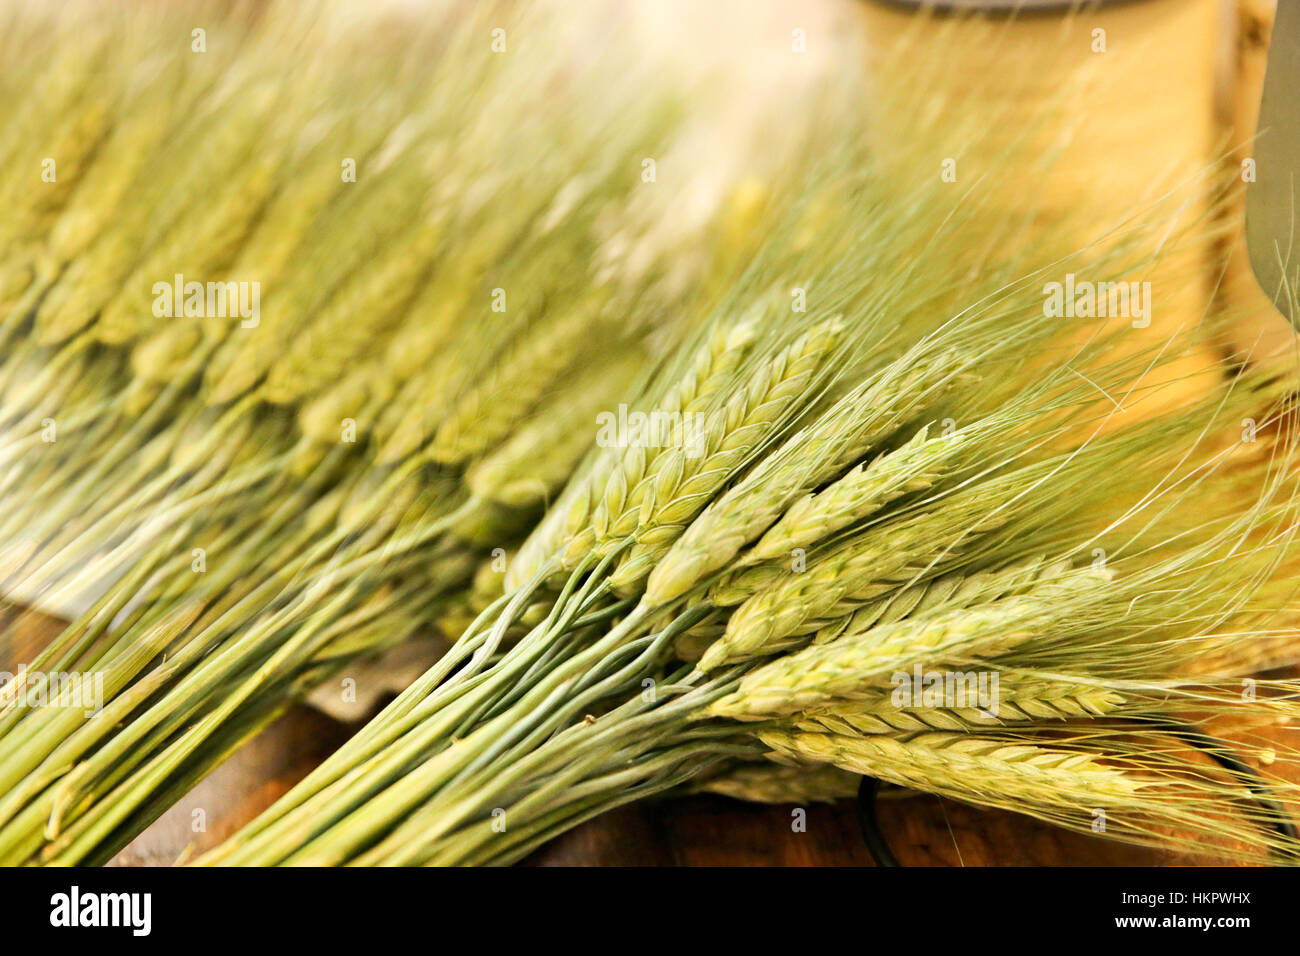 Freshly harvested wheat stalks Stock Photo